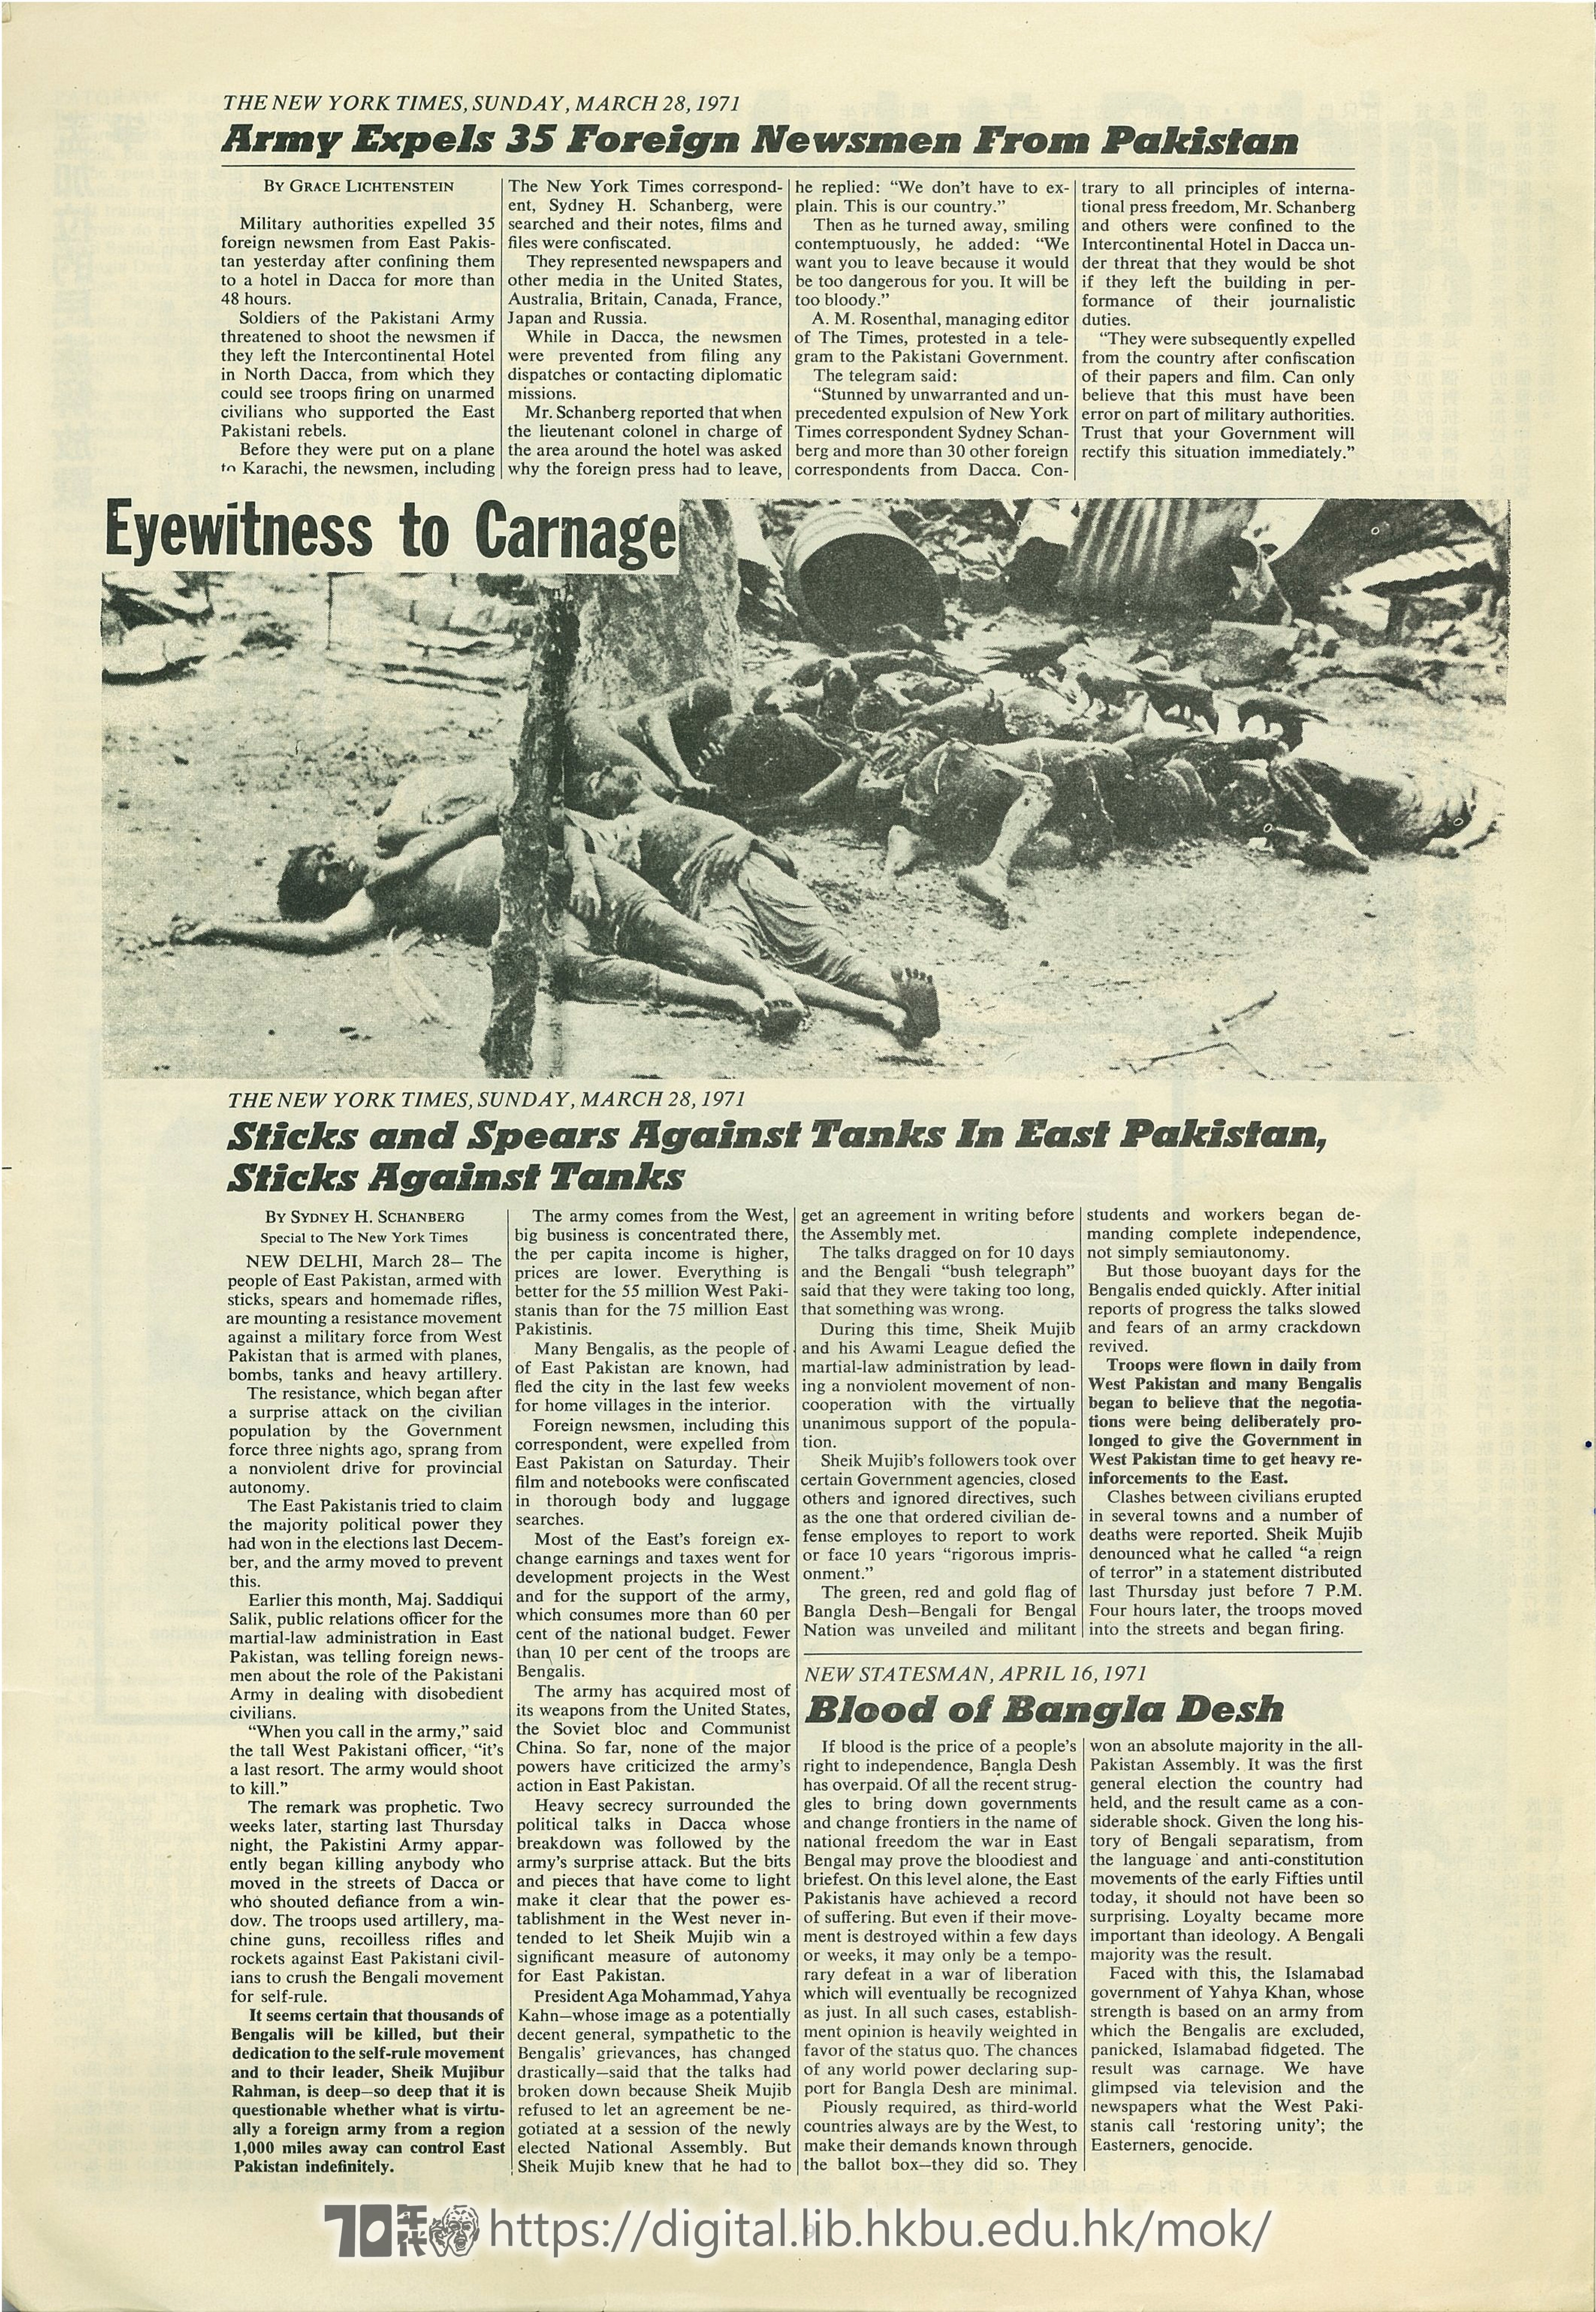   孟加拉的血 News stateman, April 16, 1971 